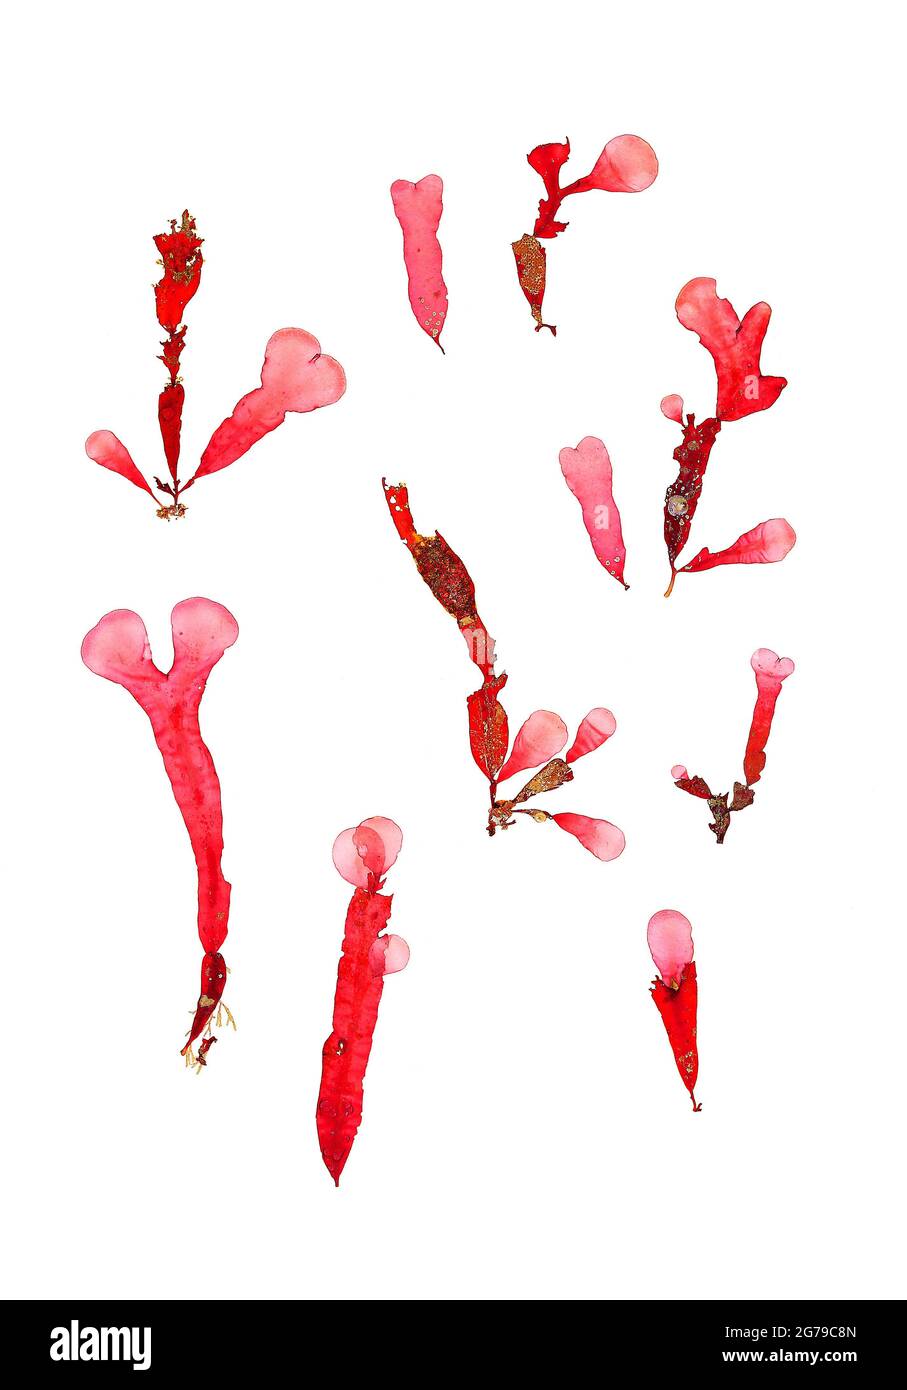 Phyllophora sicula (Kützing) Guiry & LMIrvine, Red Alga (Florideophyceae) Stock Photo